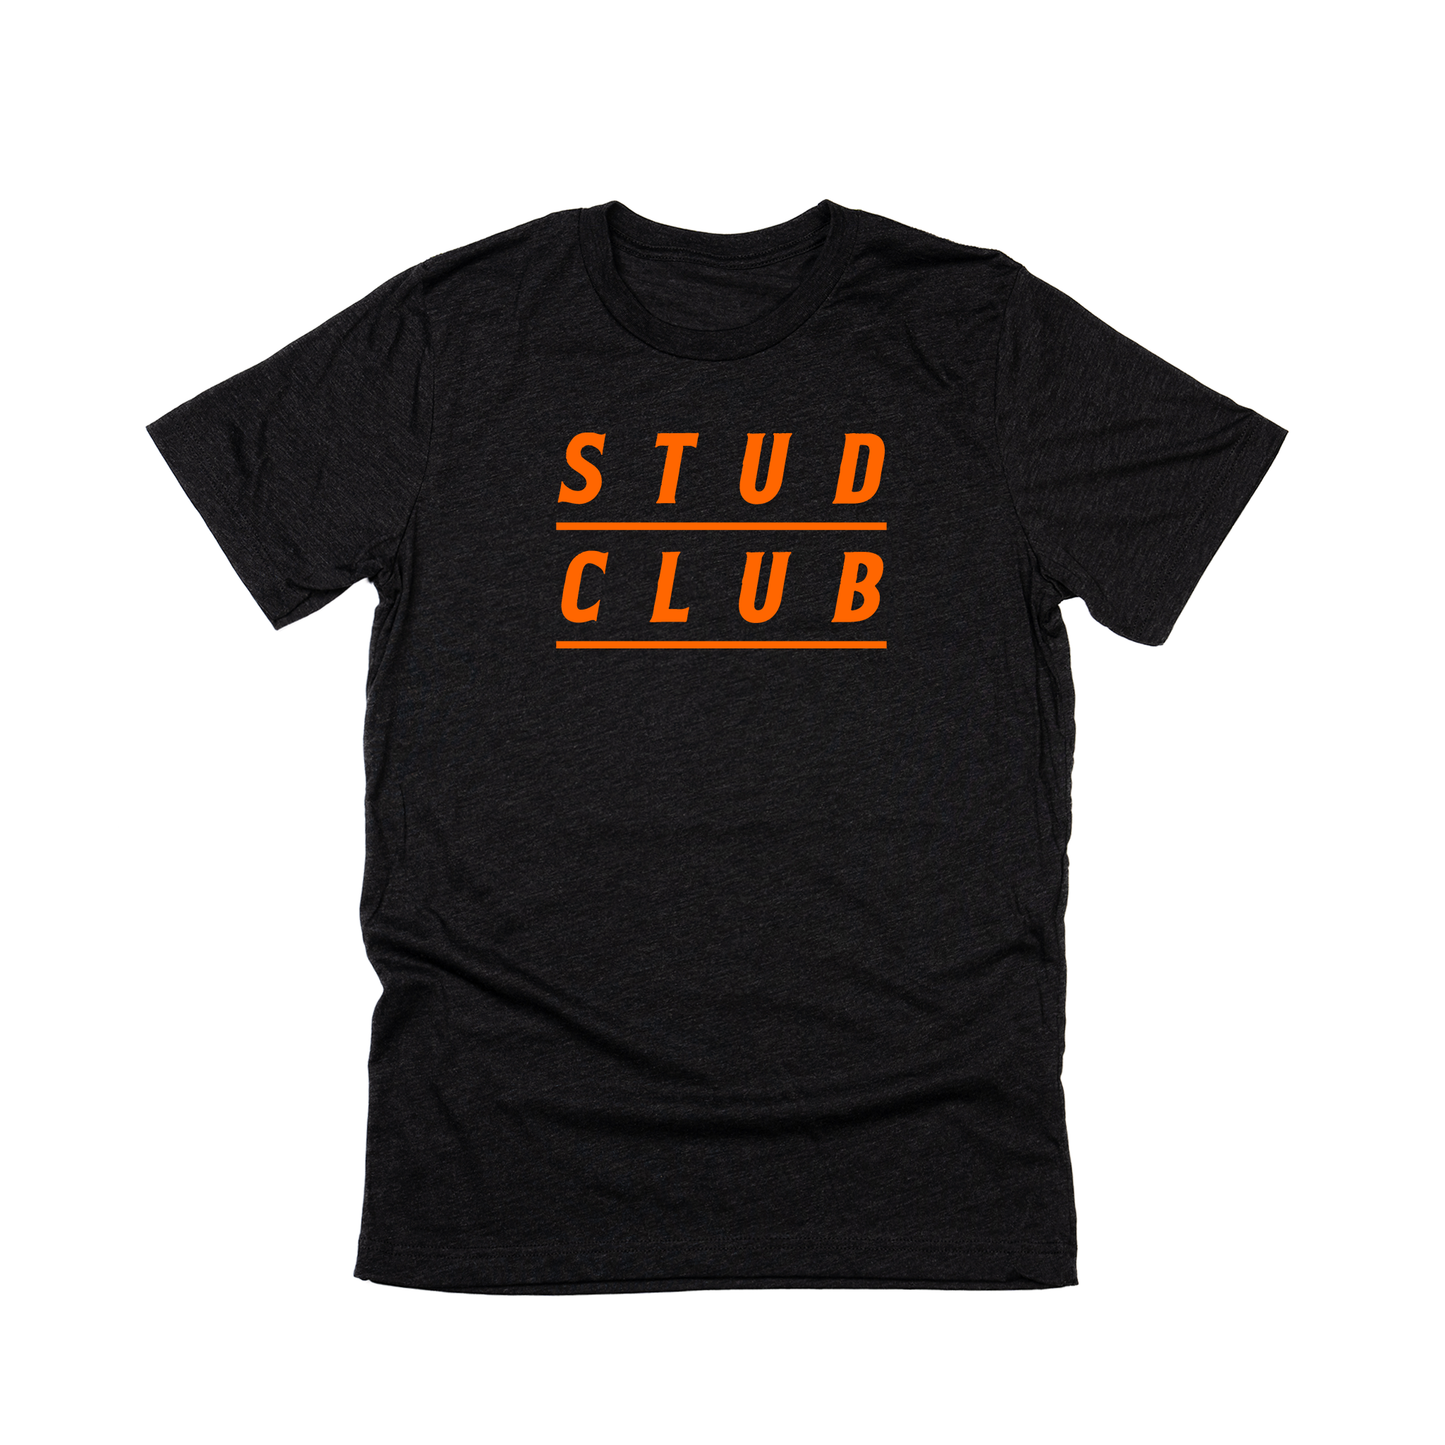 STUD CLUB (Across Front) - Tee (Charcoal Black)